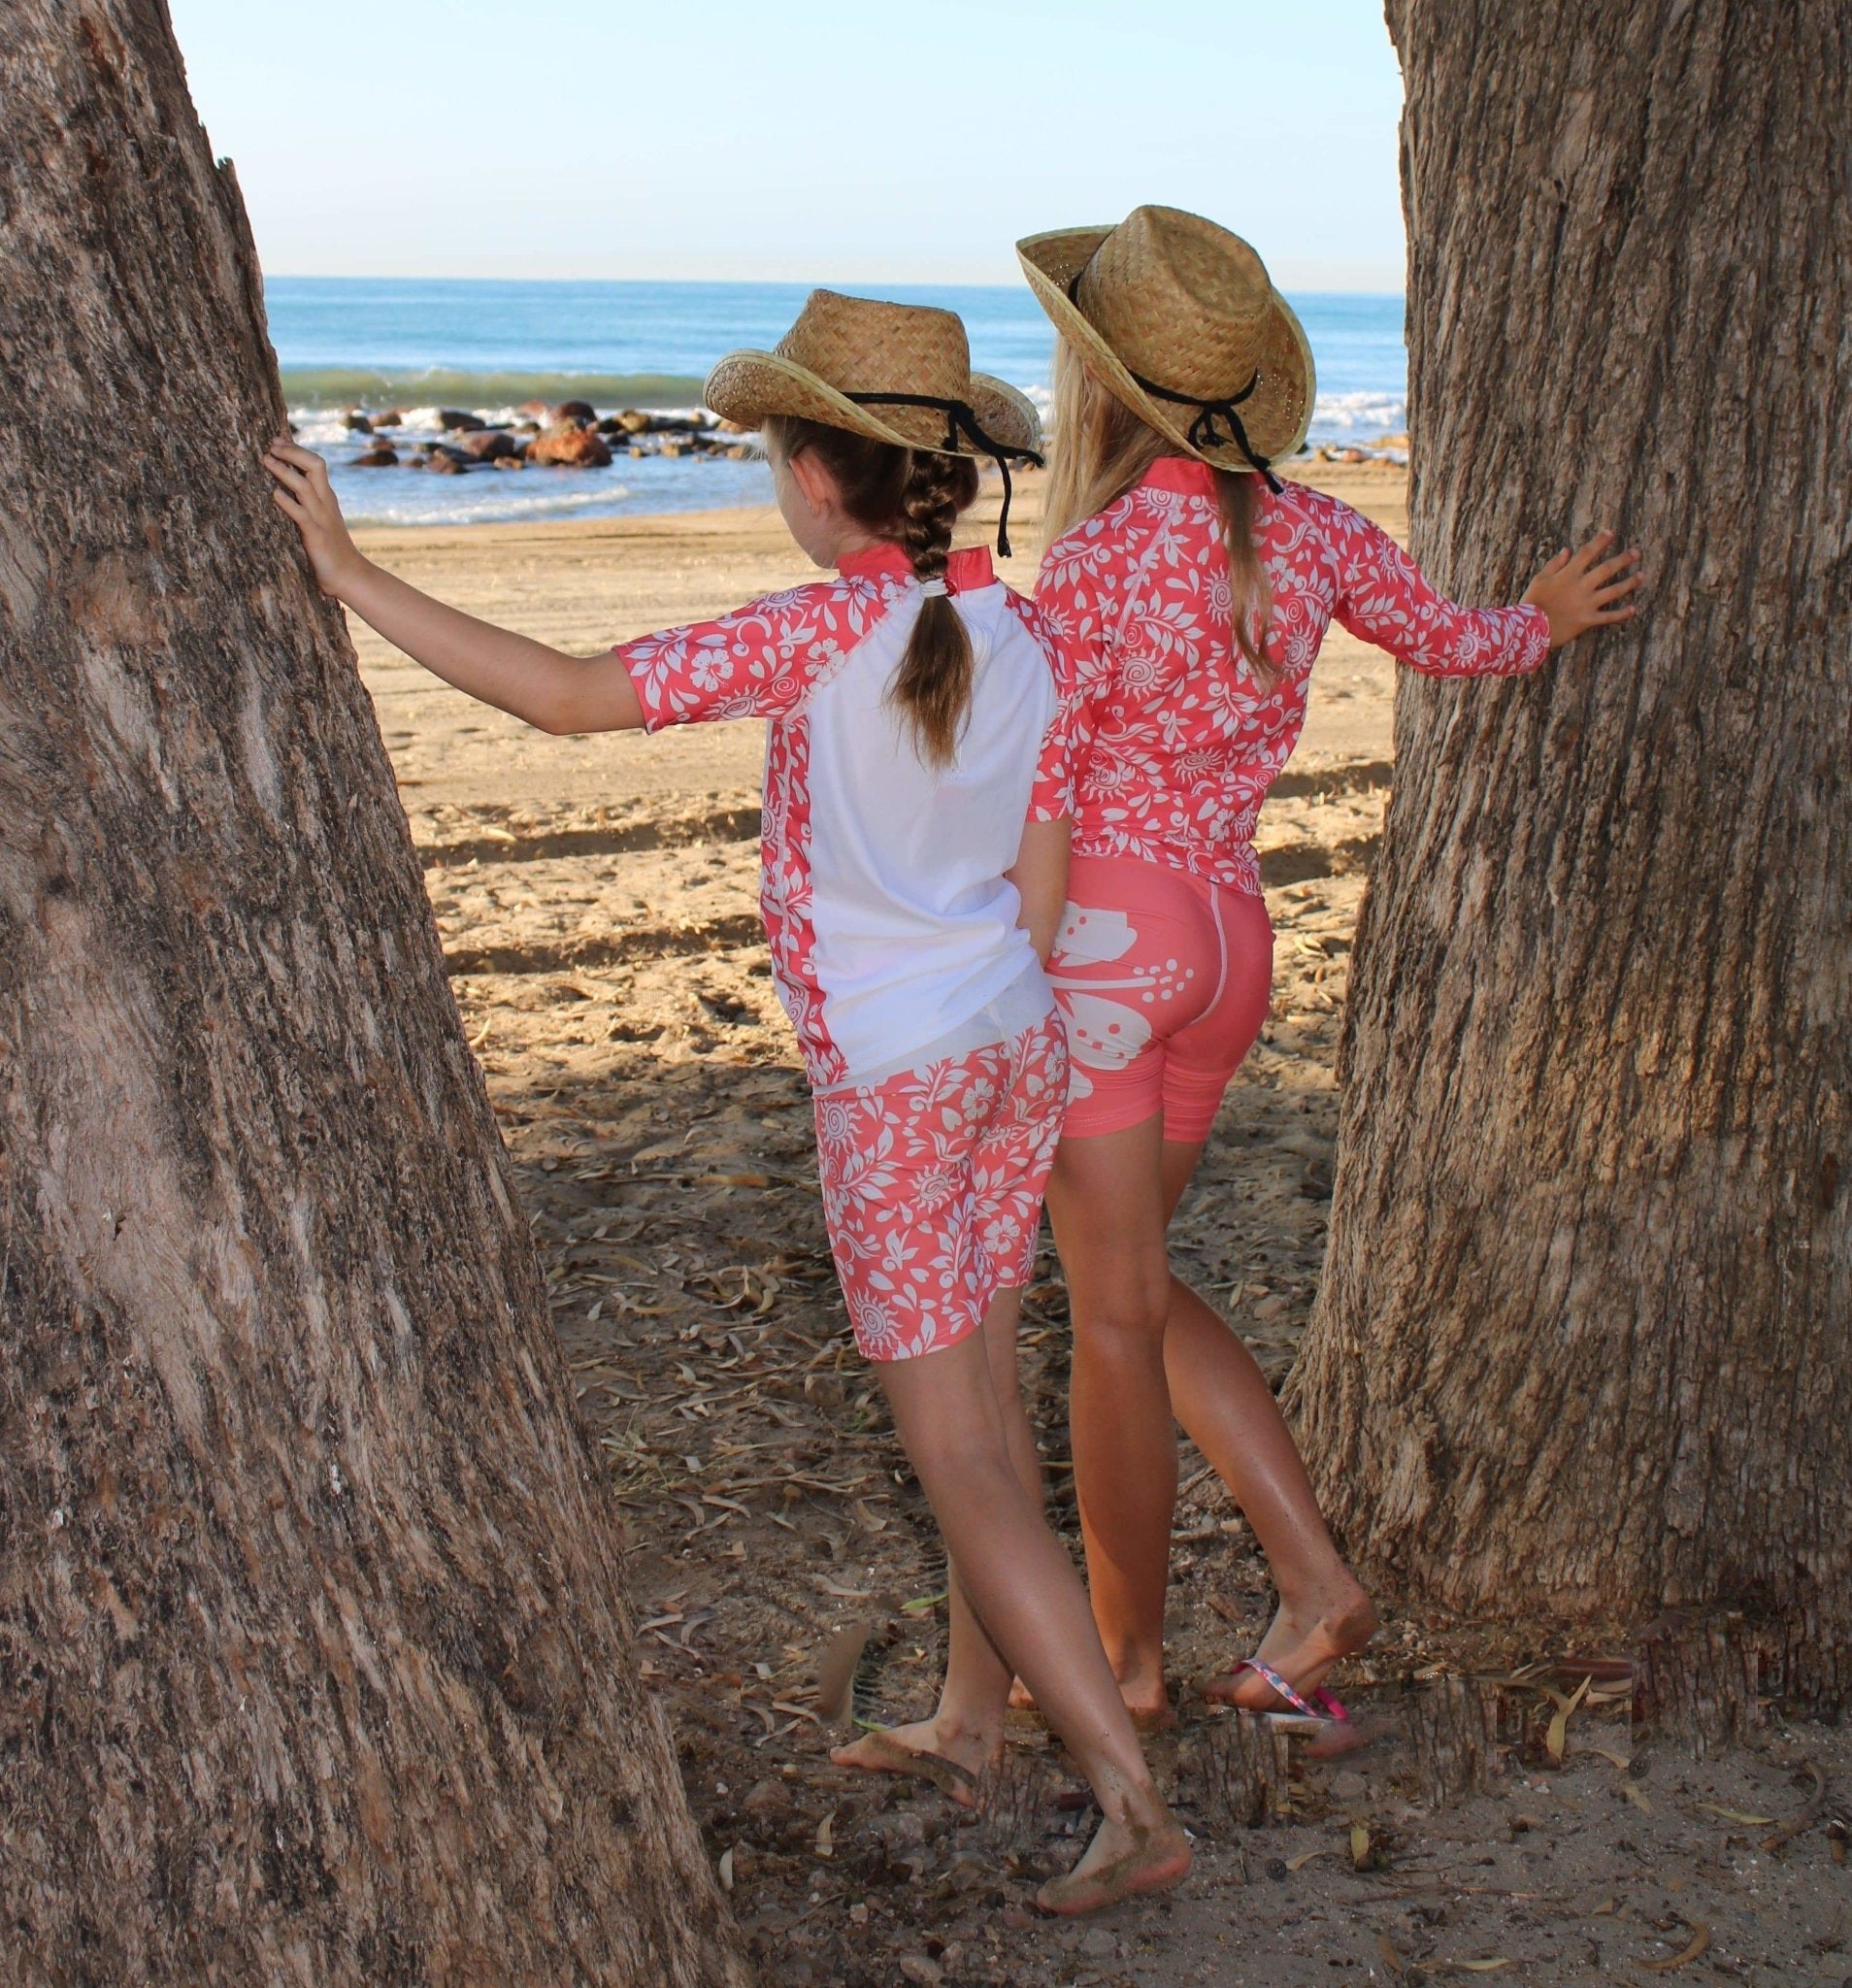 California Sunshine Girls modest UPF 50+ Floral Print swim shorts